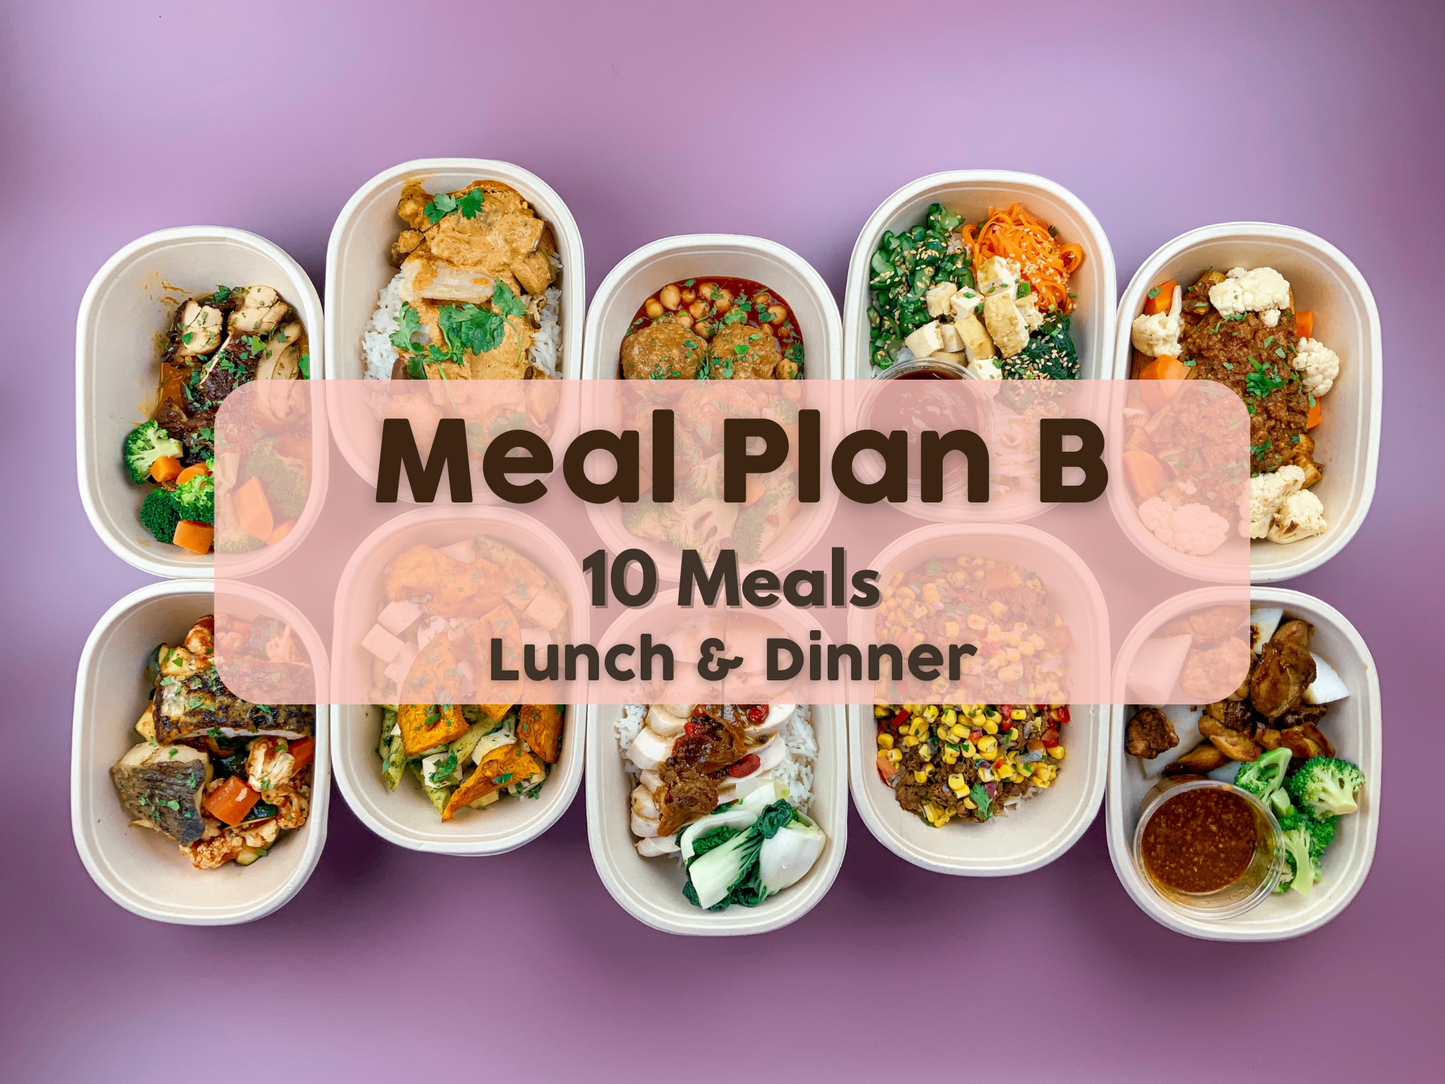 6th - 10th November Meal Plan B